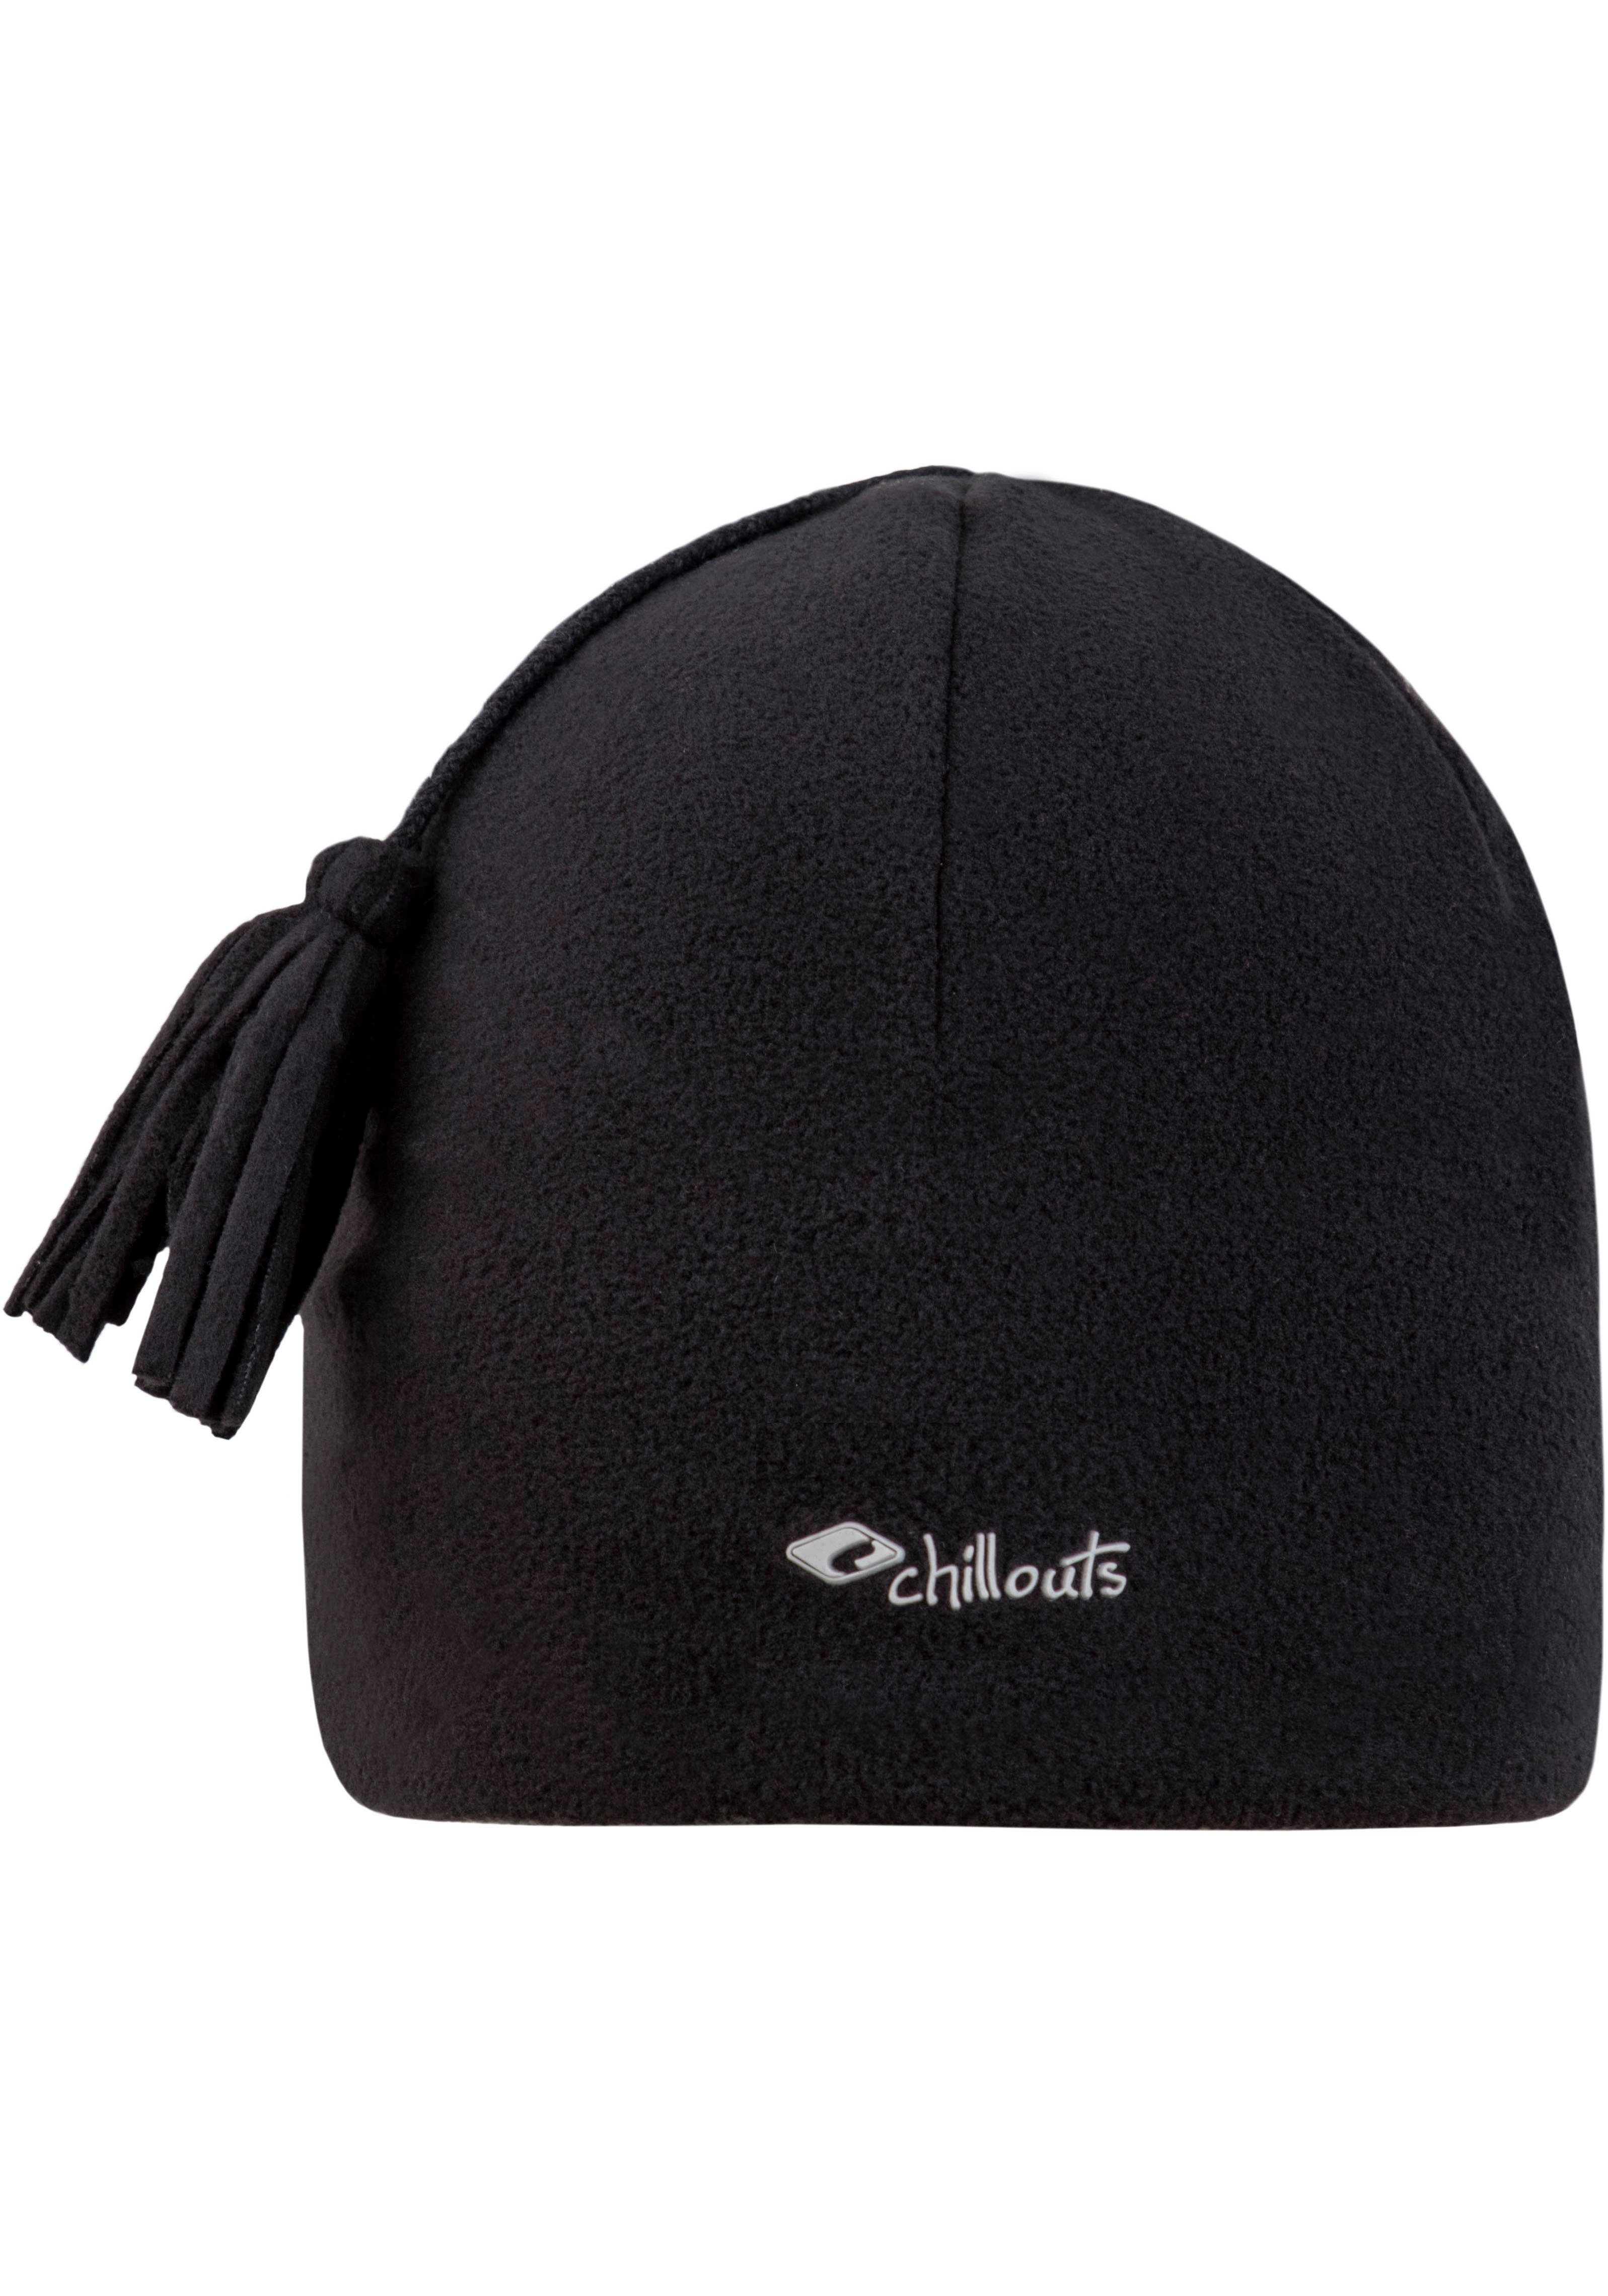 chillouts Fleecemütze Freeze Fleece black Hat Pom